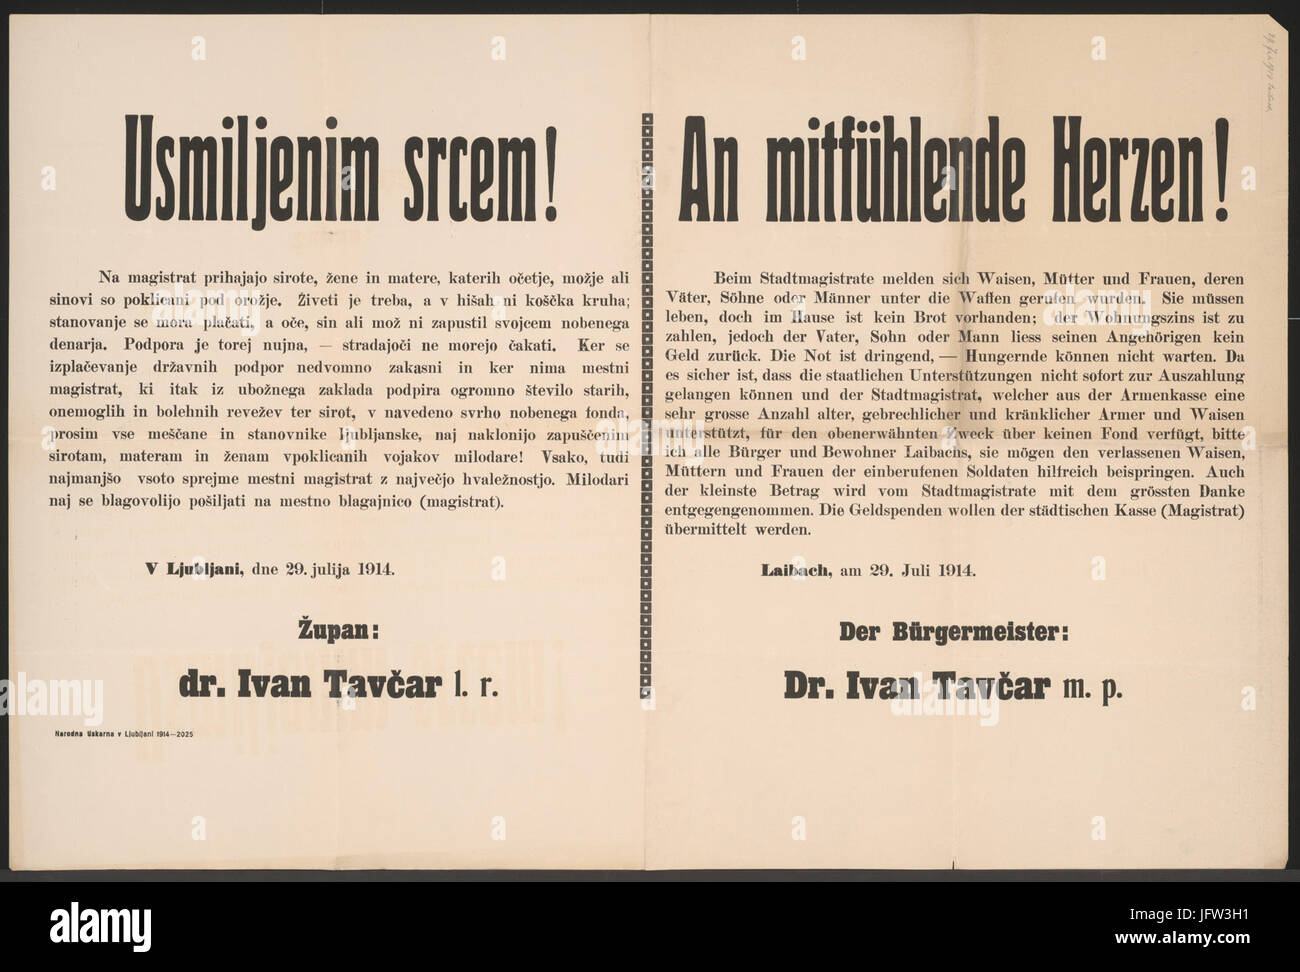 Un mitfühlende Herzen - Laibach - Mehrsprachiges Plakat 1914 Foto Stock